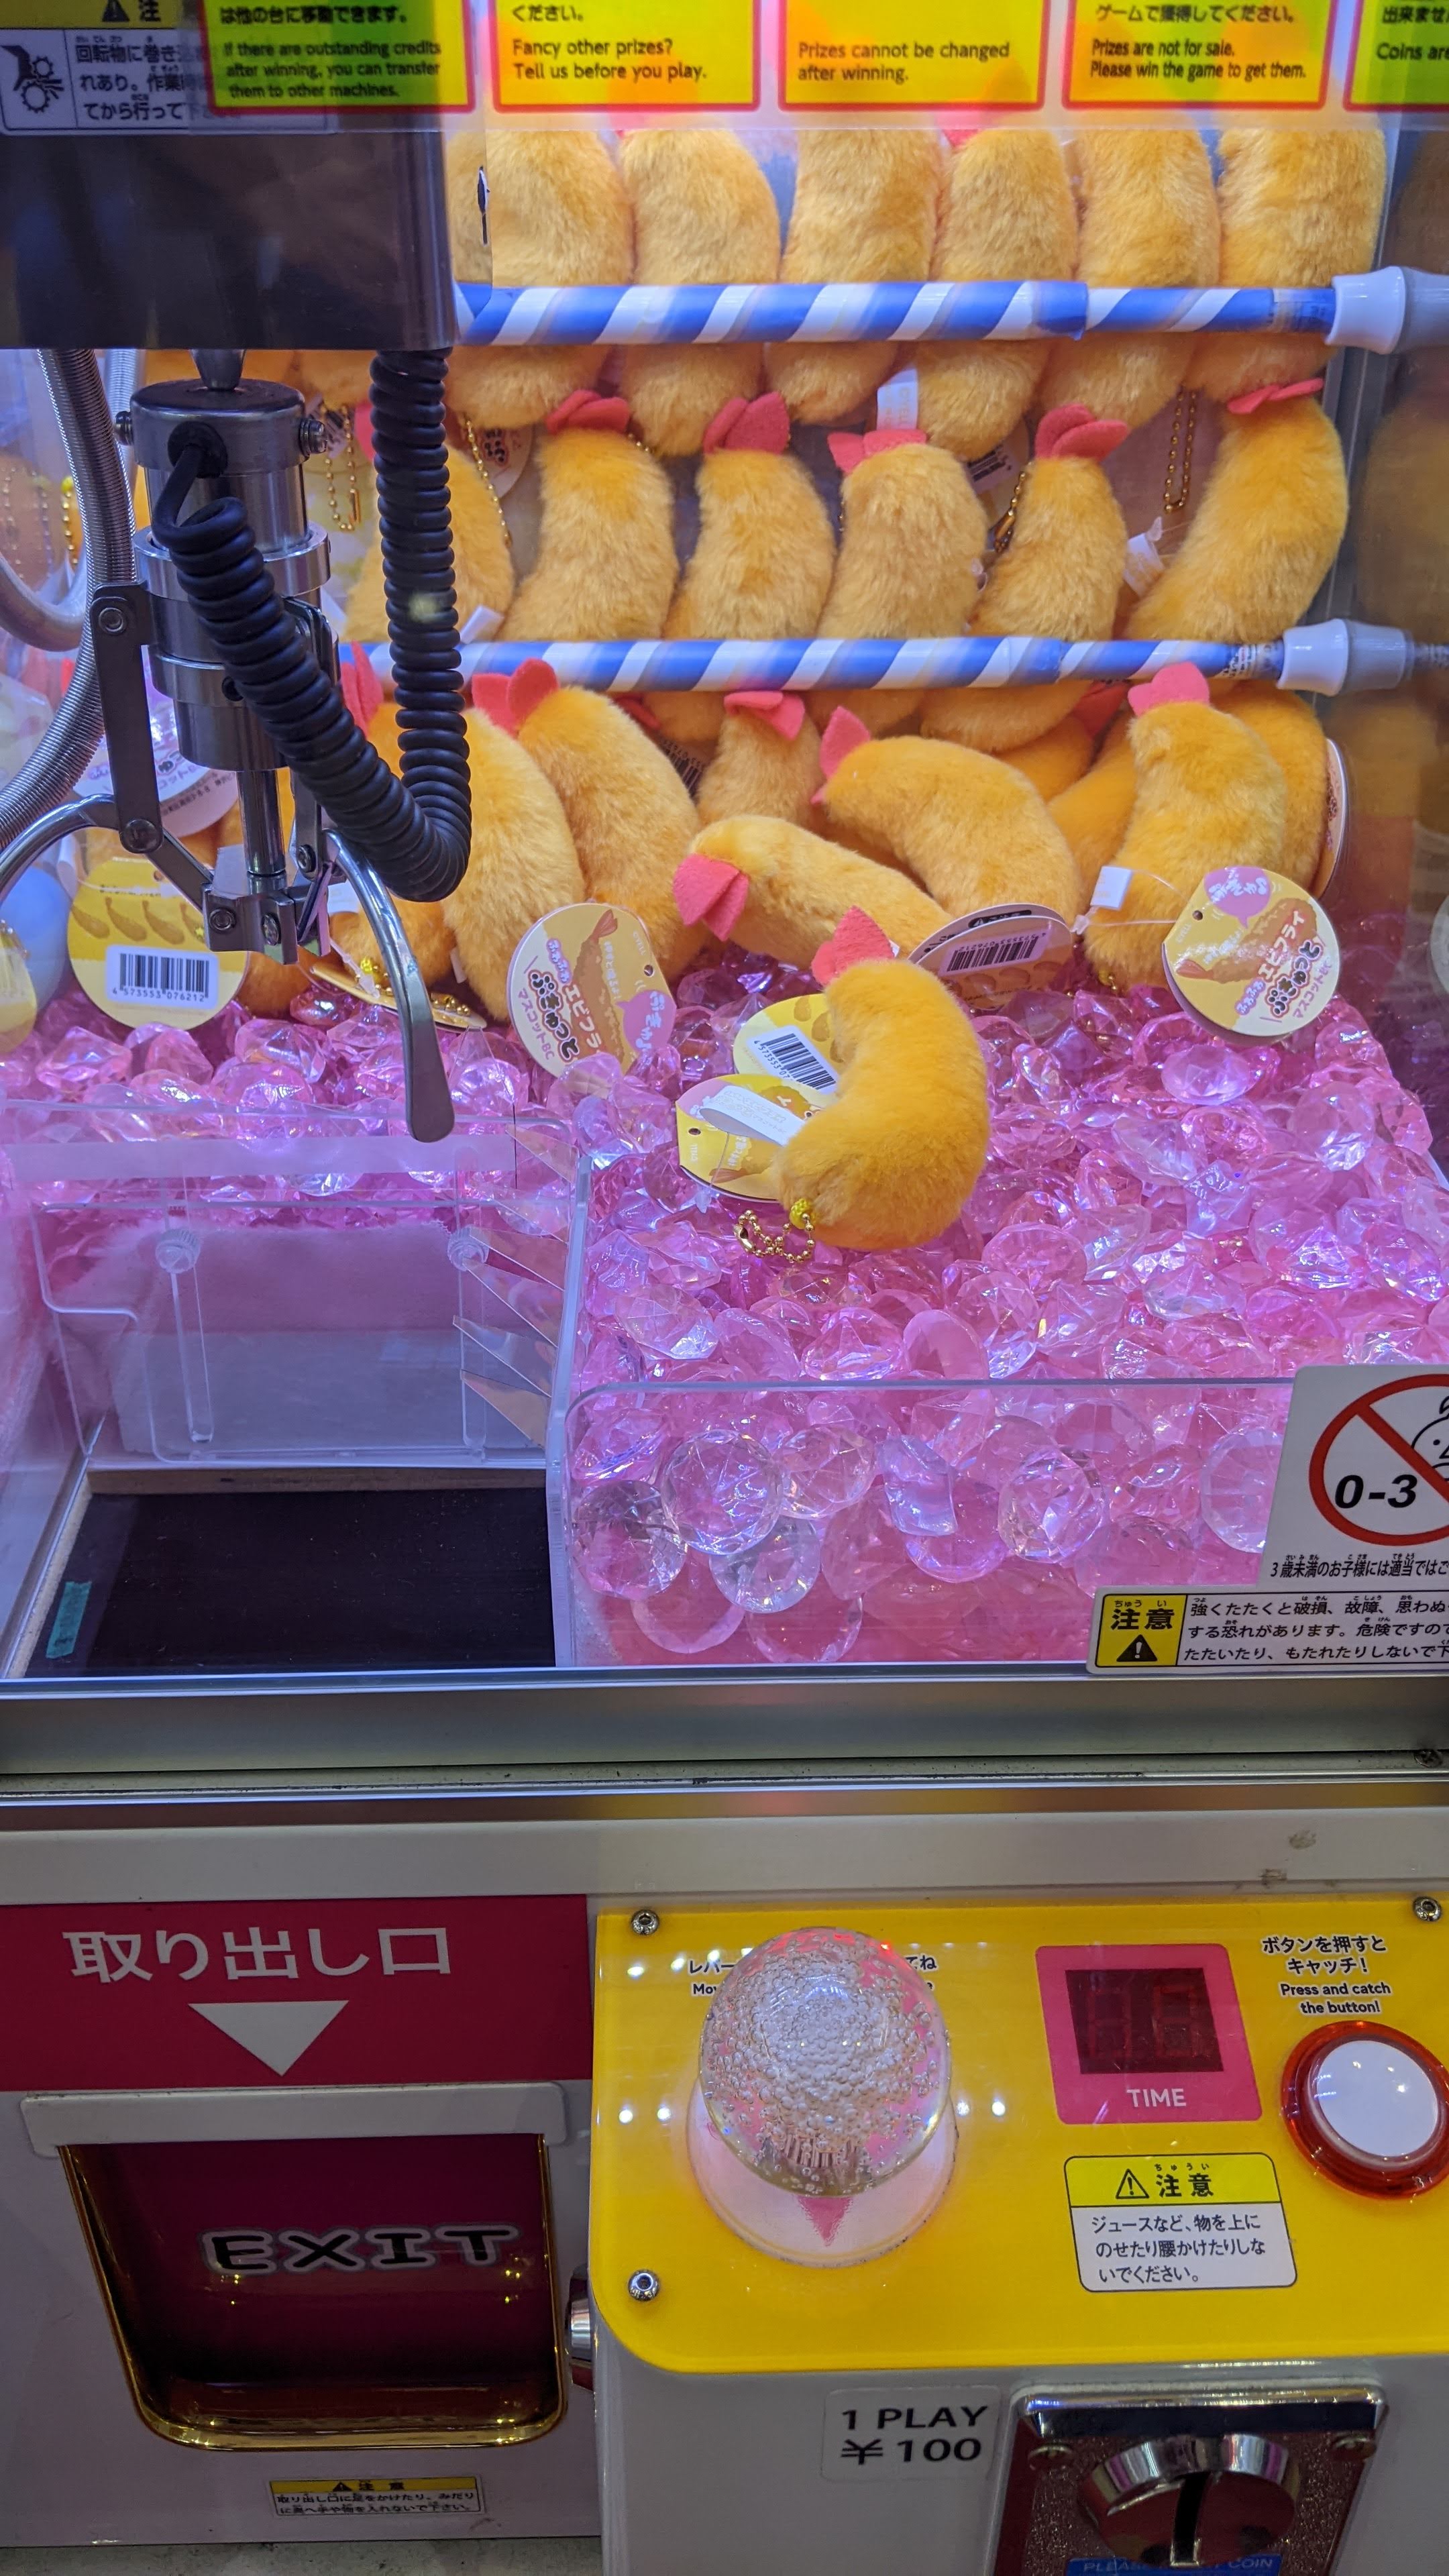 A crane game with mini plush tempura shrimp inside